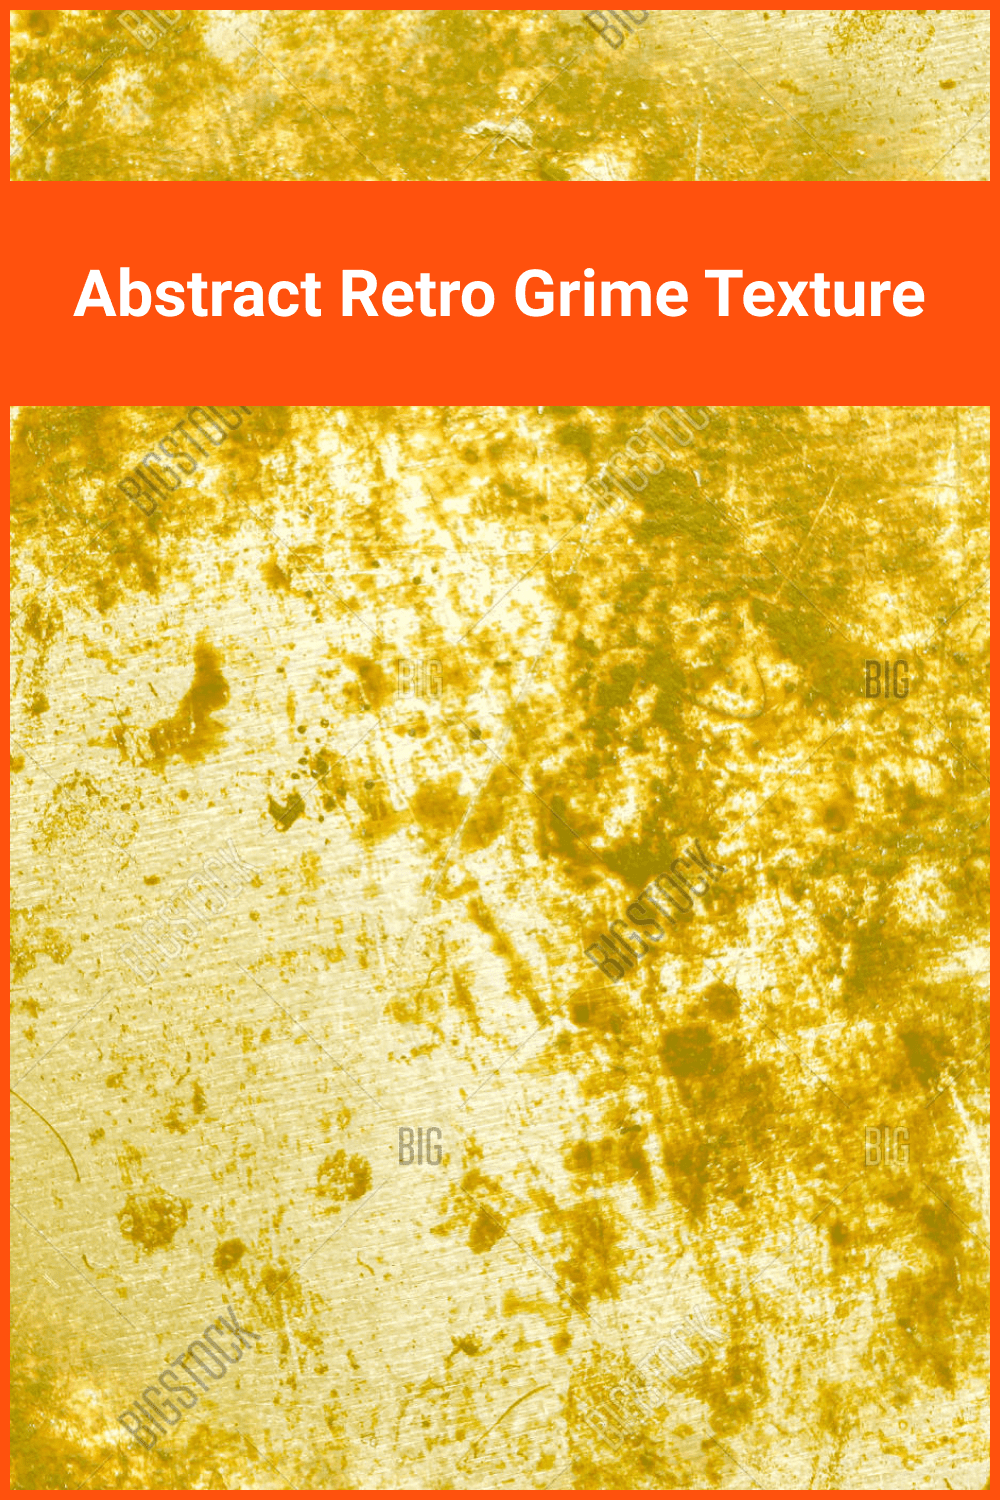 Abstract retro grime texture.